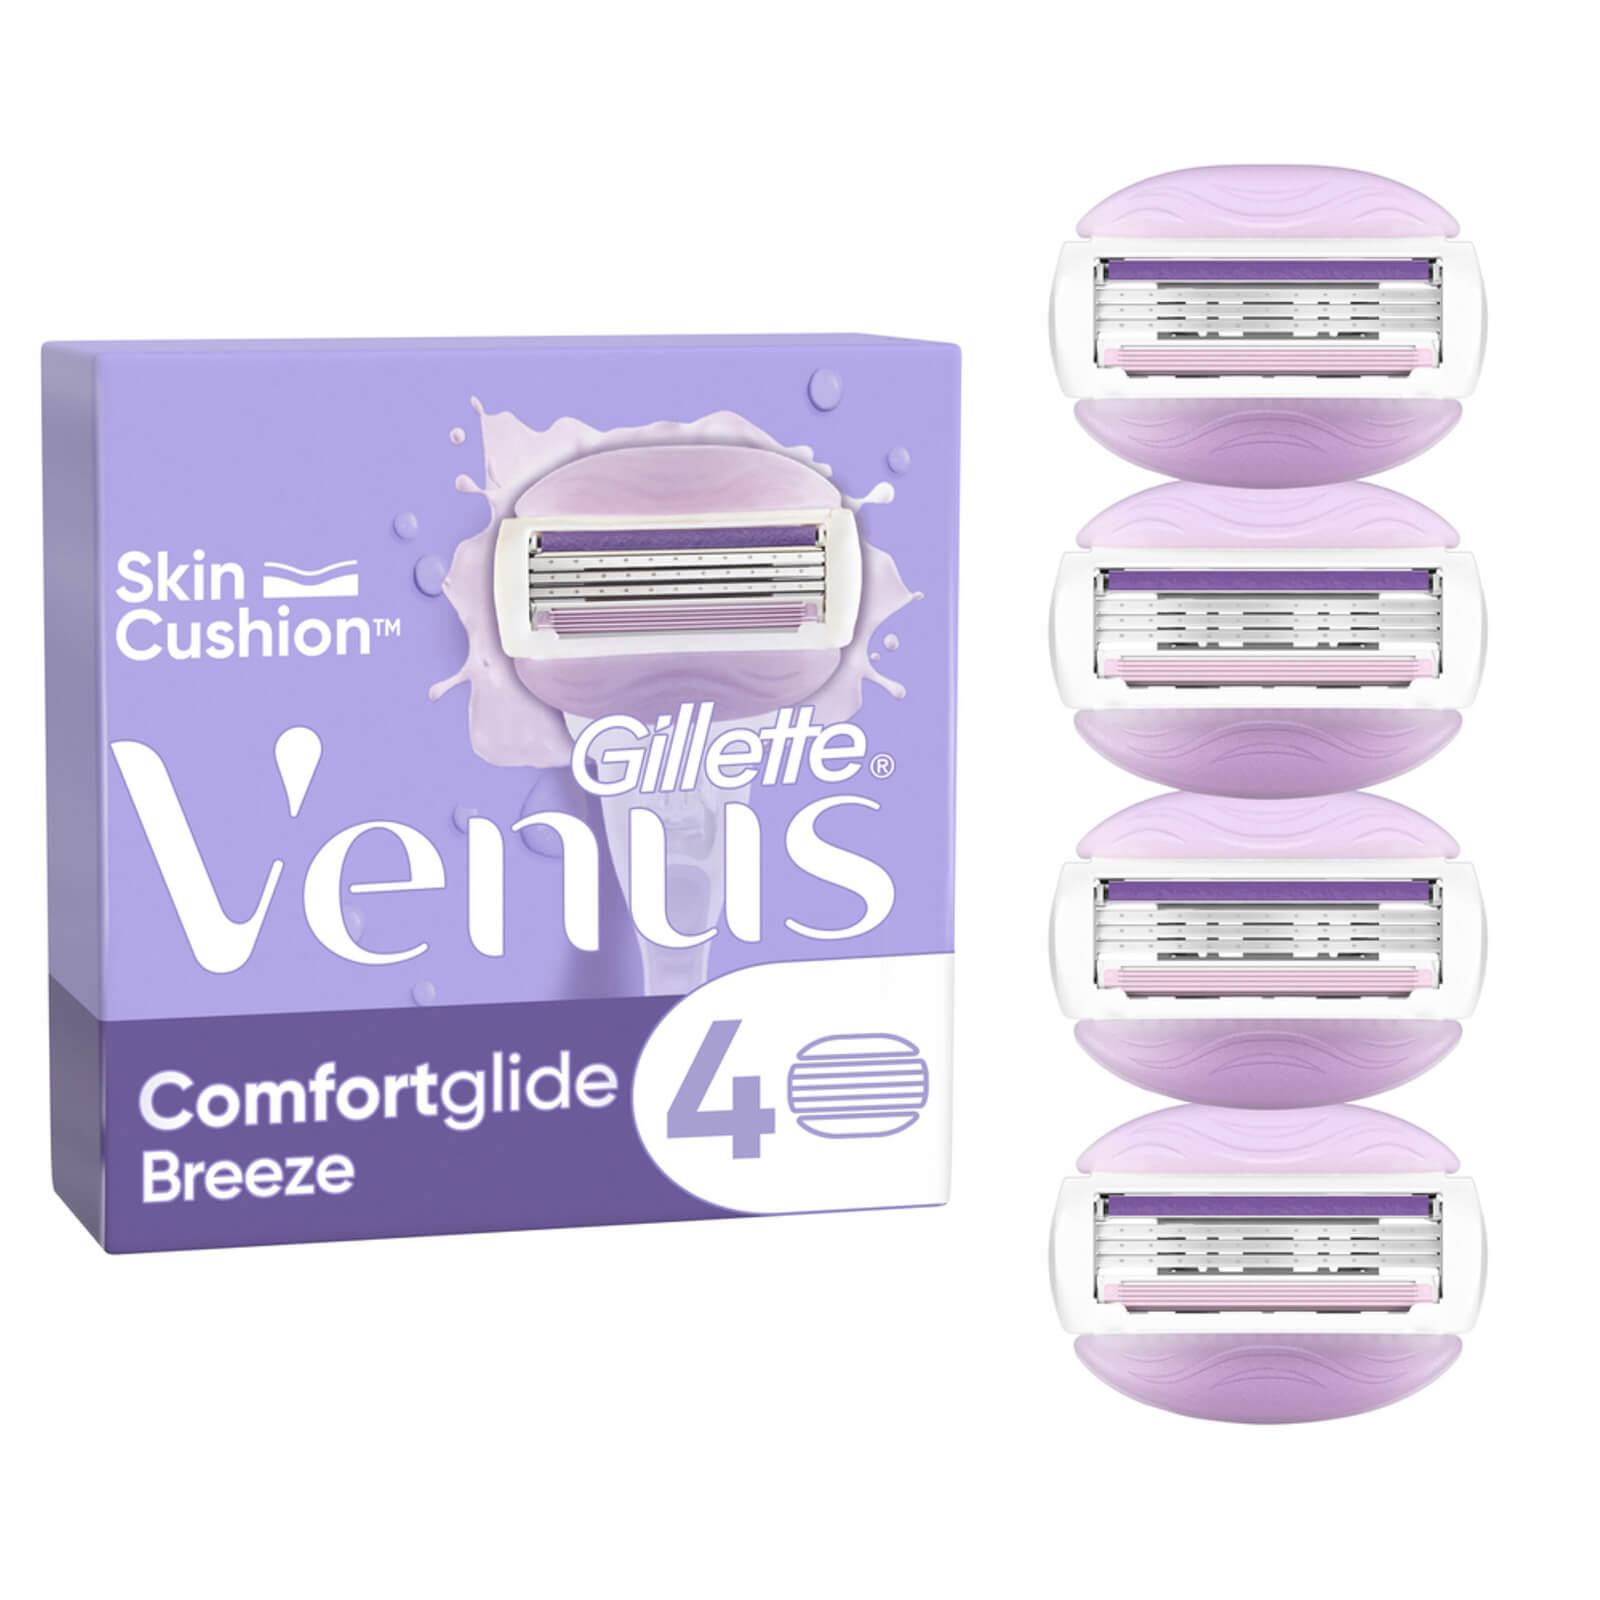 Venus ComfortGlide Breeze Blades - 4 Pack